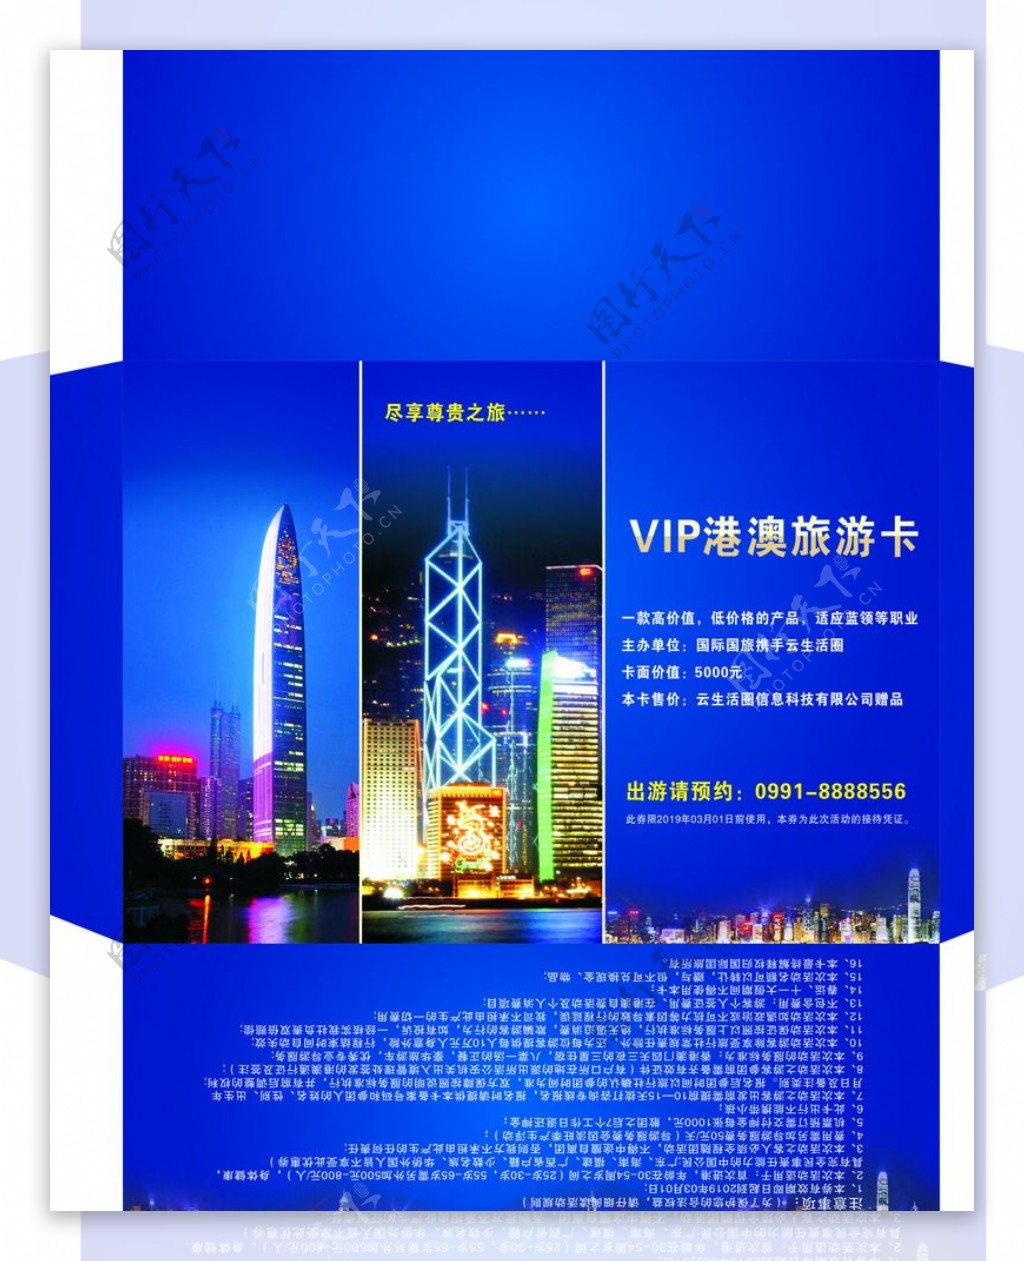 VIP港澳旅游卡